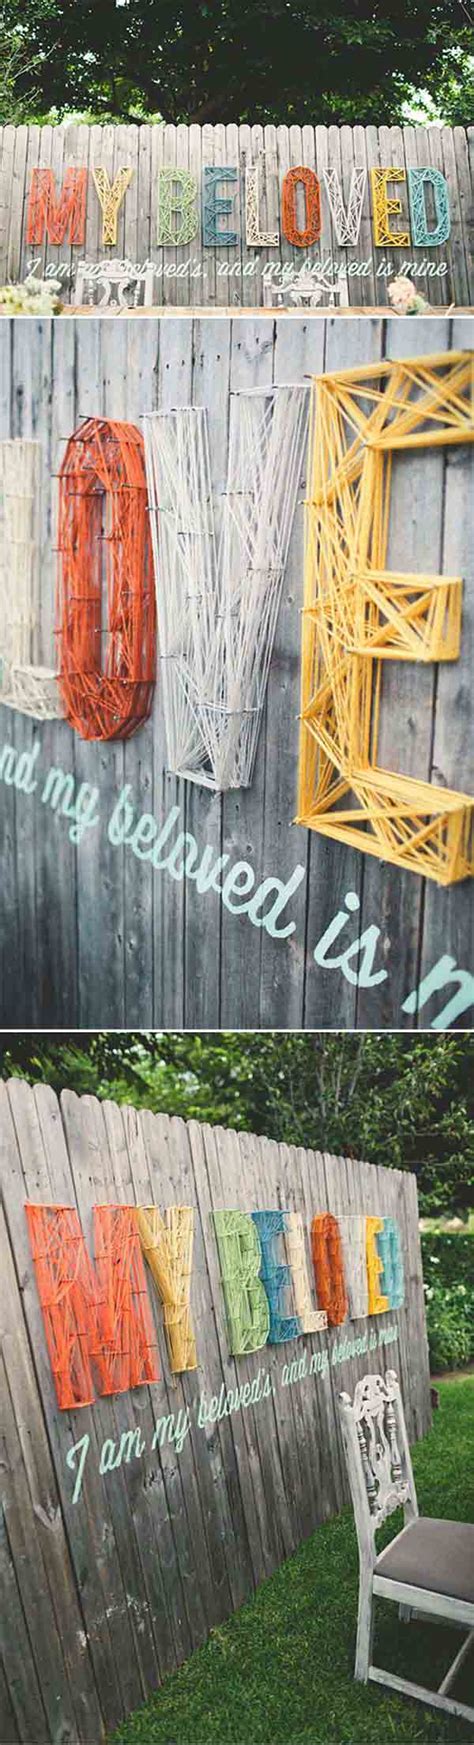 Top 23 Surprising Diy Ideas To Decorate Your Garden Fence